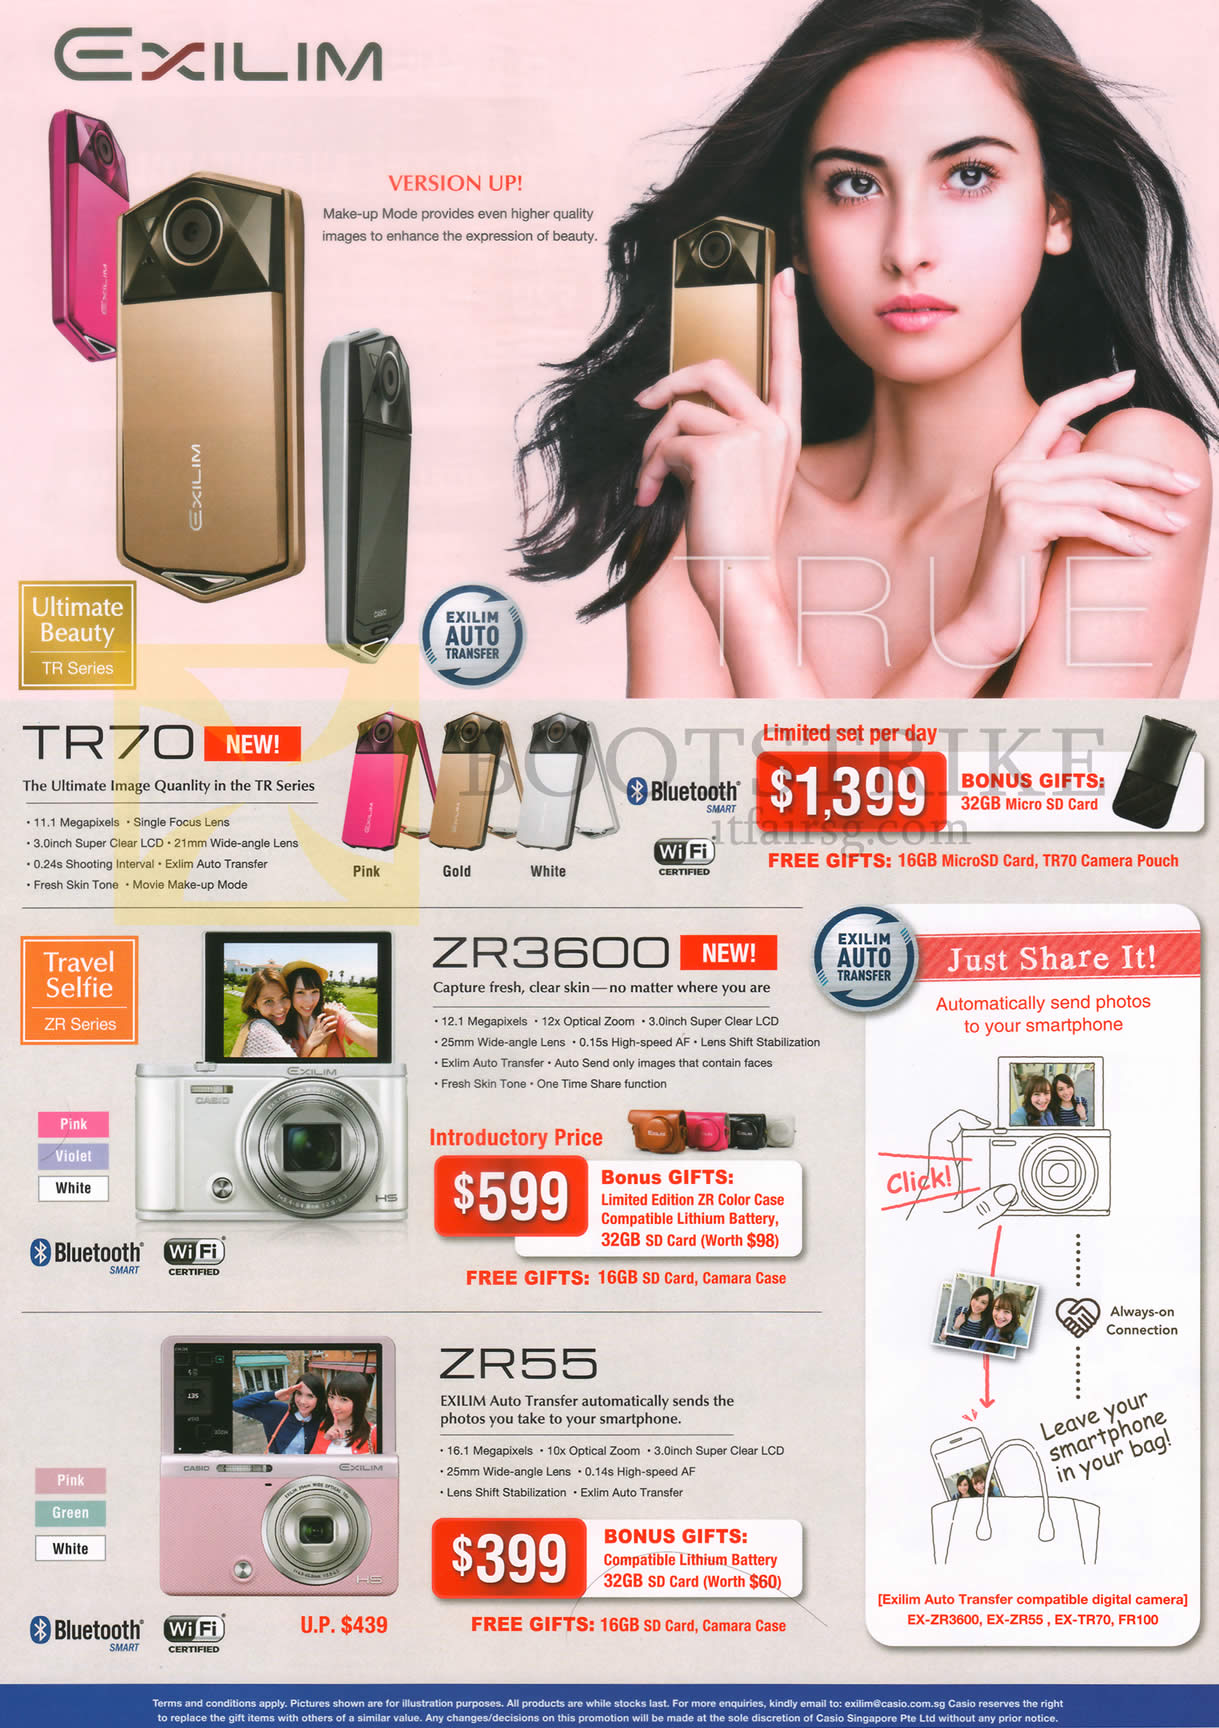 IT SHOW 2016 price list image brochure of Casio Exilim Digital Cameras TR70, ZR3600, ZR55